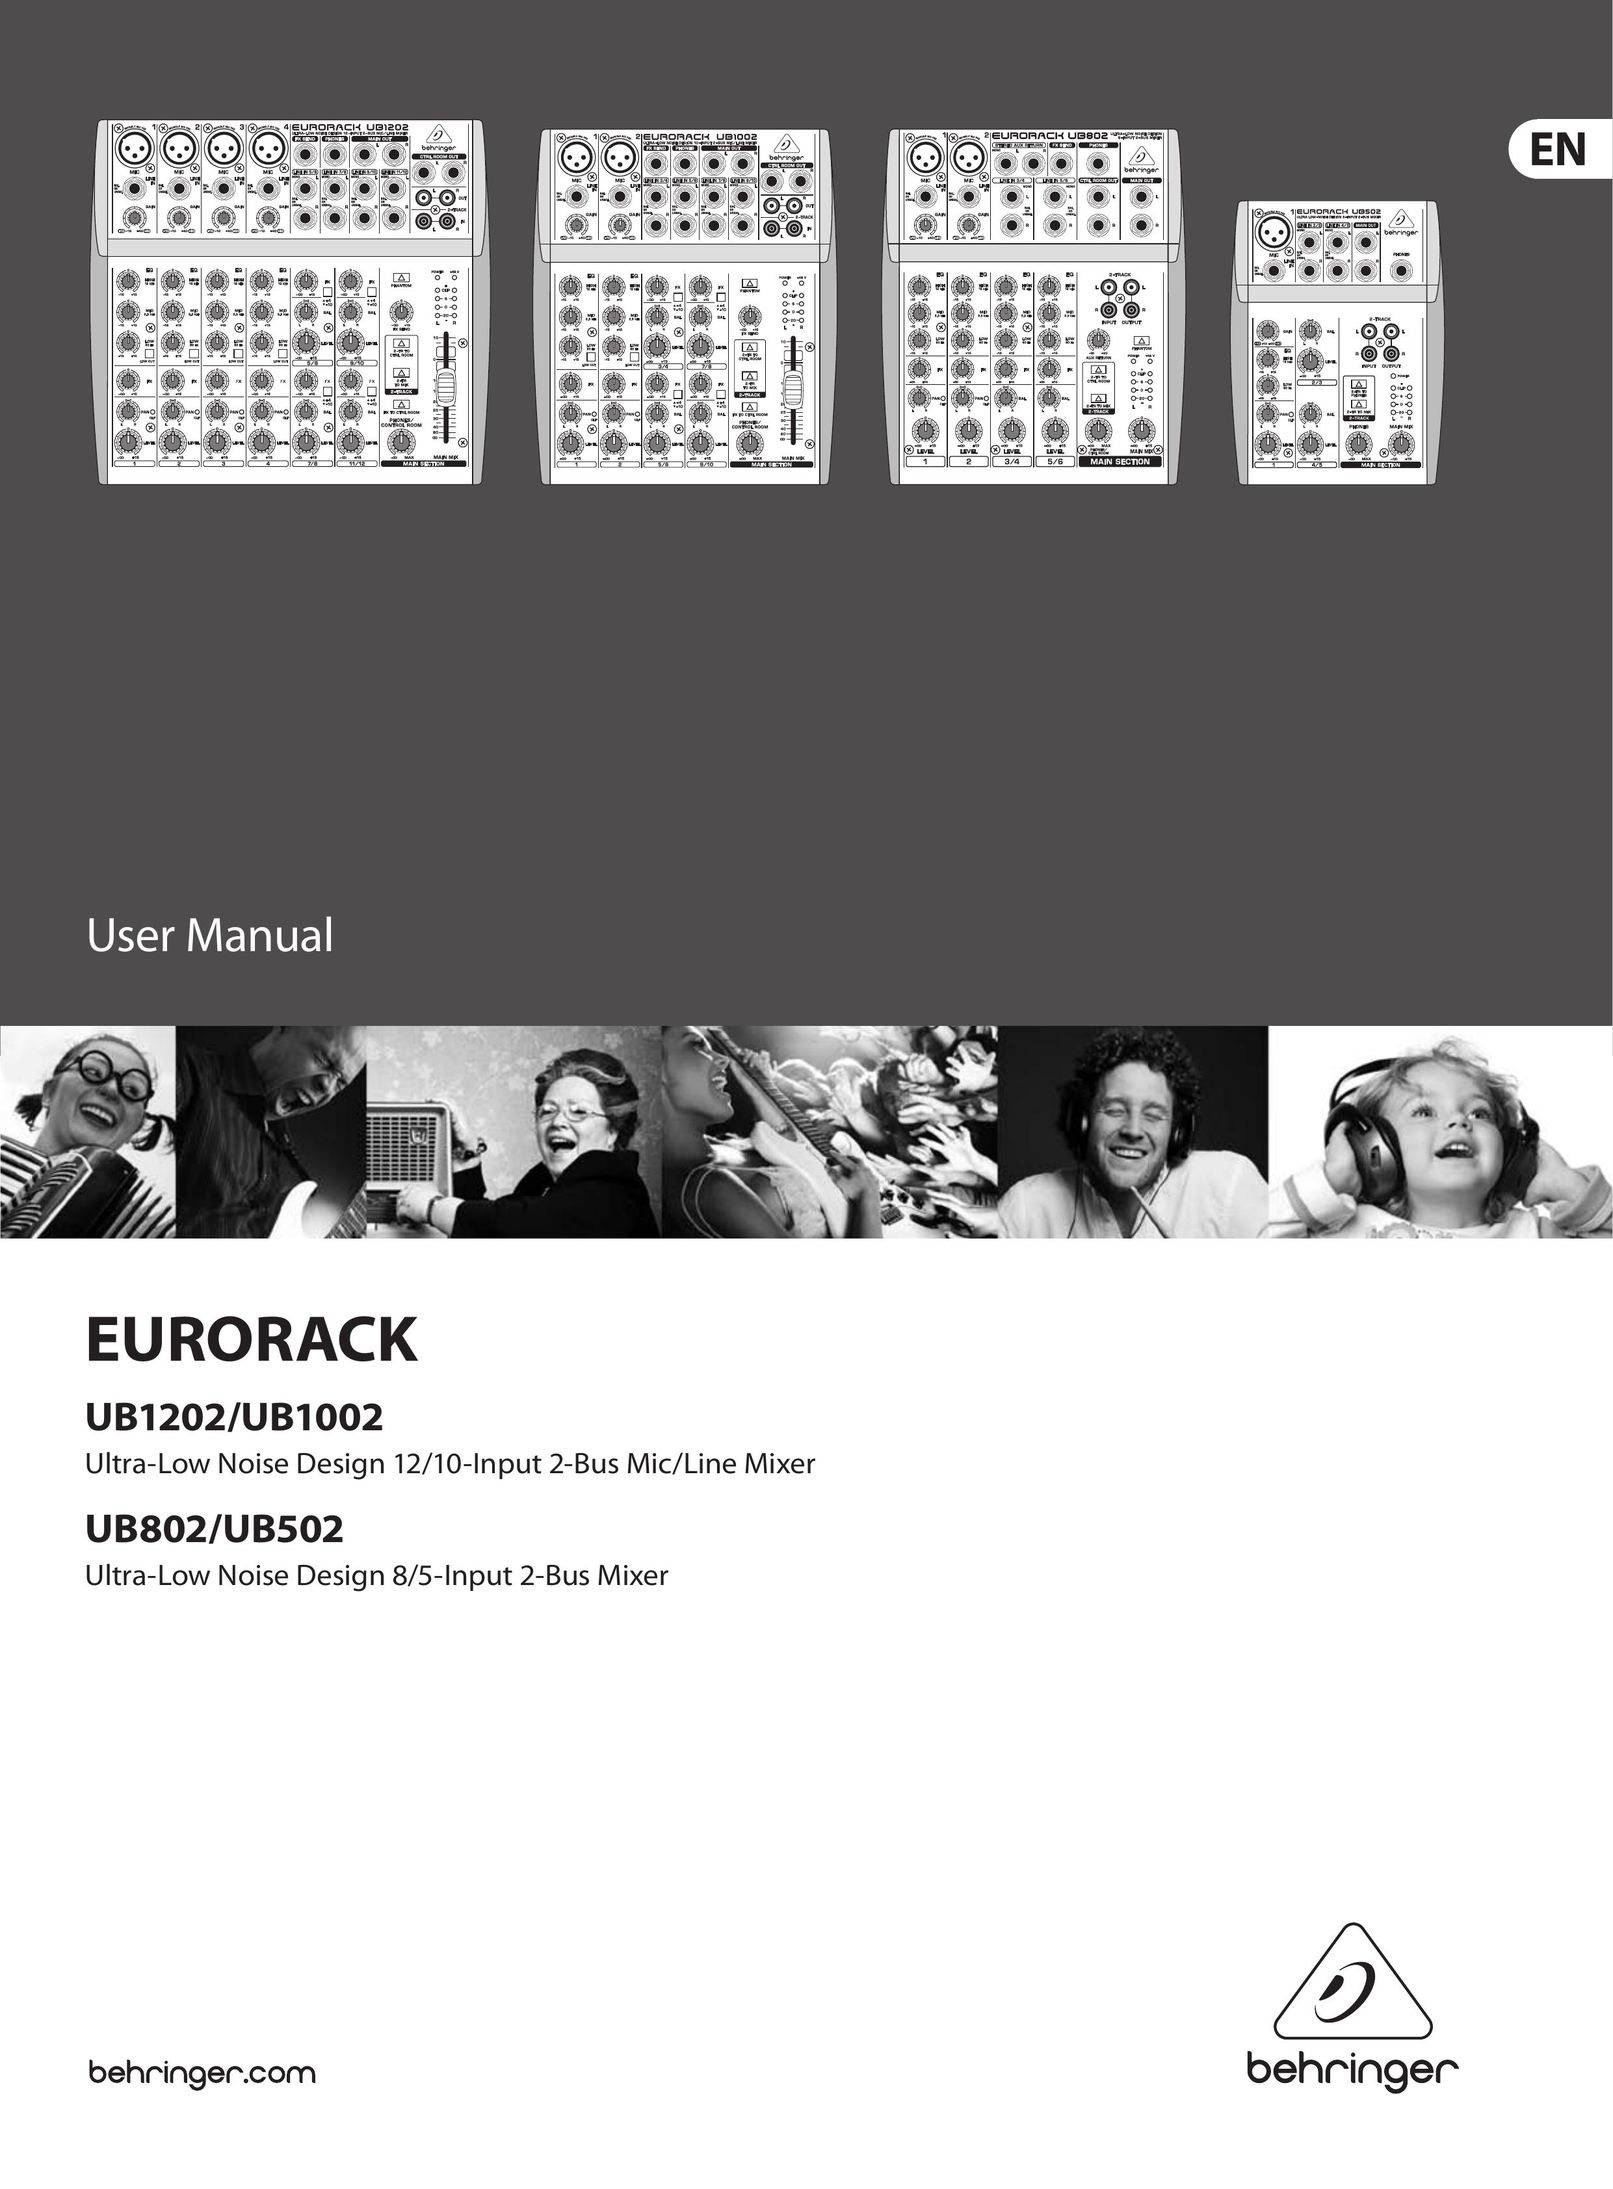 Behringer UB802/UB502 Mixer User Manual